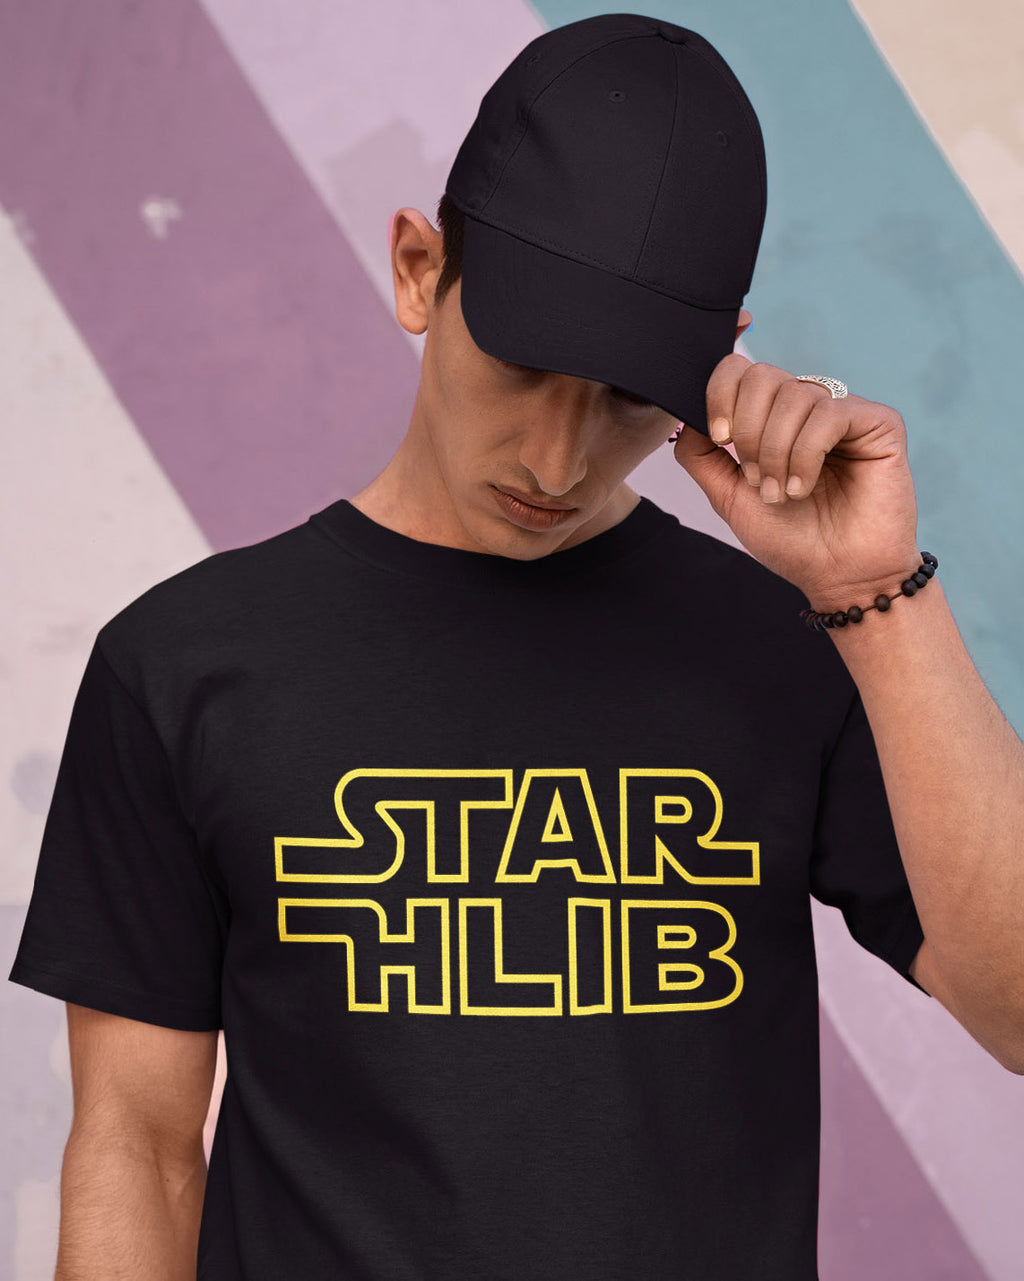 Star Hlib